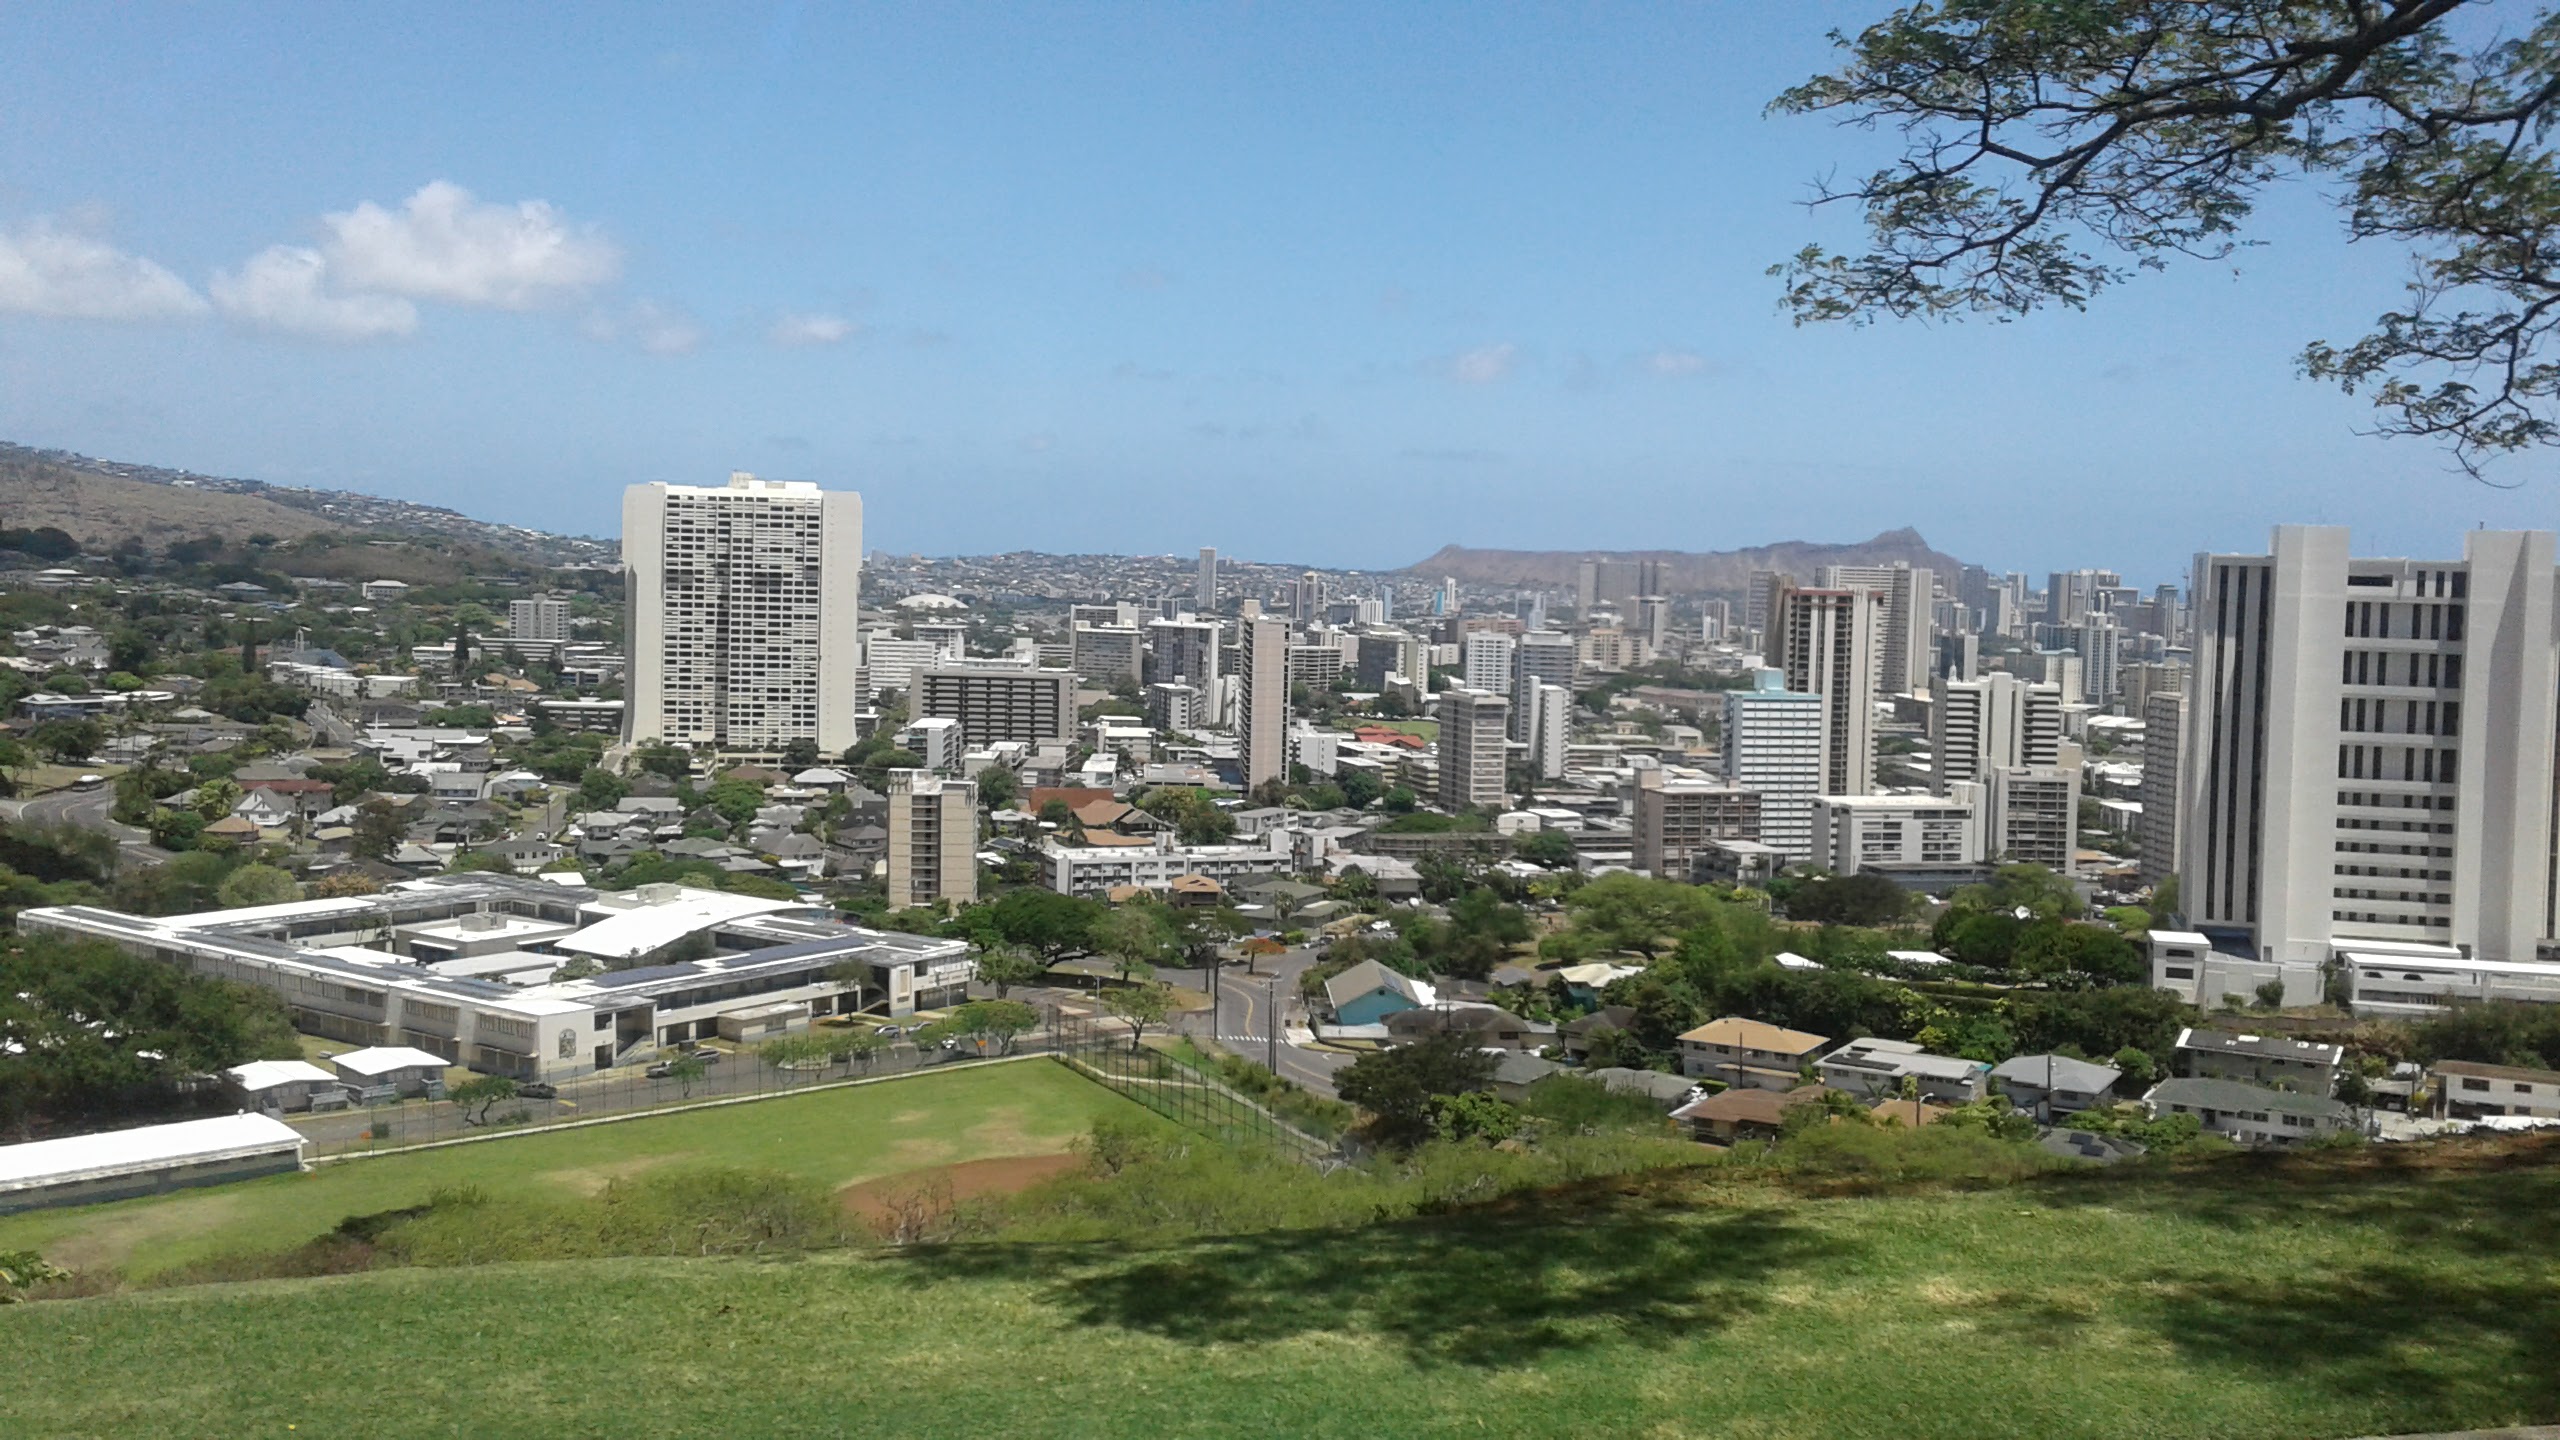 Honolulu City